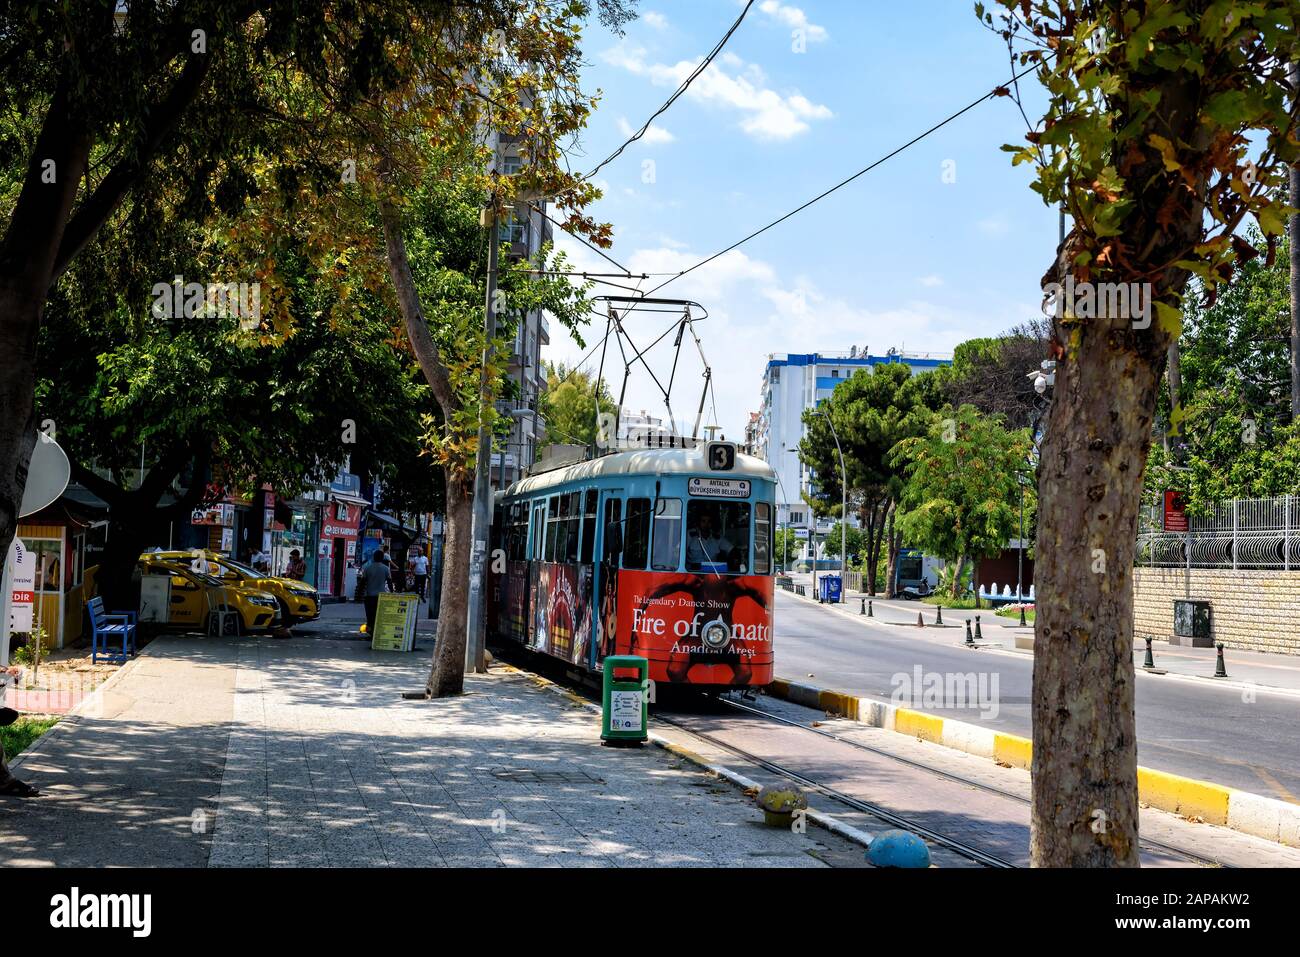 Antalya, Turkey - July 26, 2019: Old nostalgic public transport tram in ANTALYA with advertising in summer Stock Photo